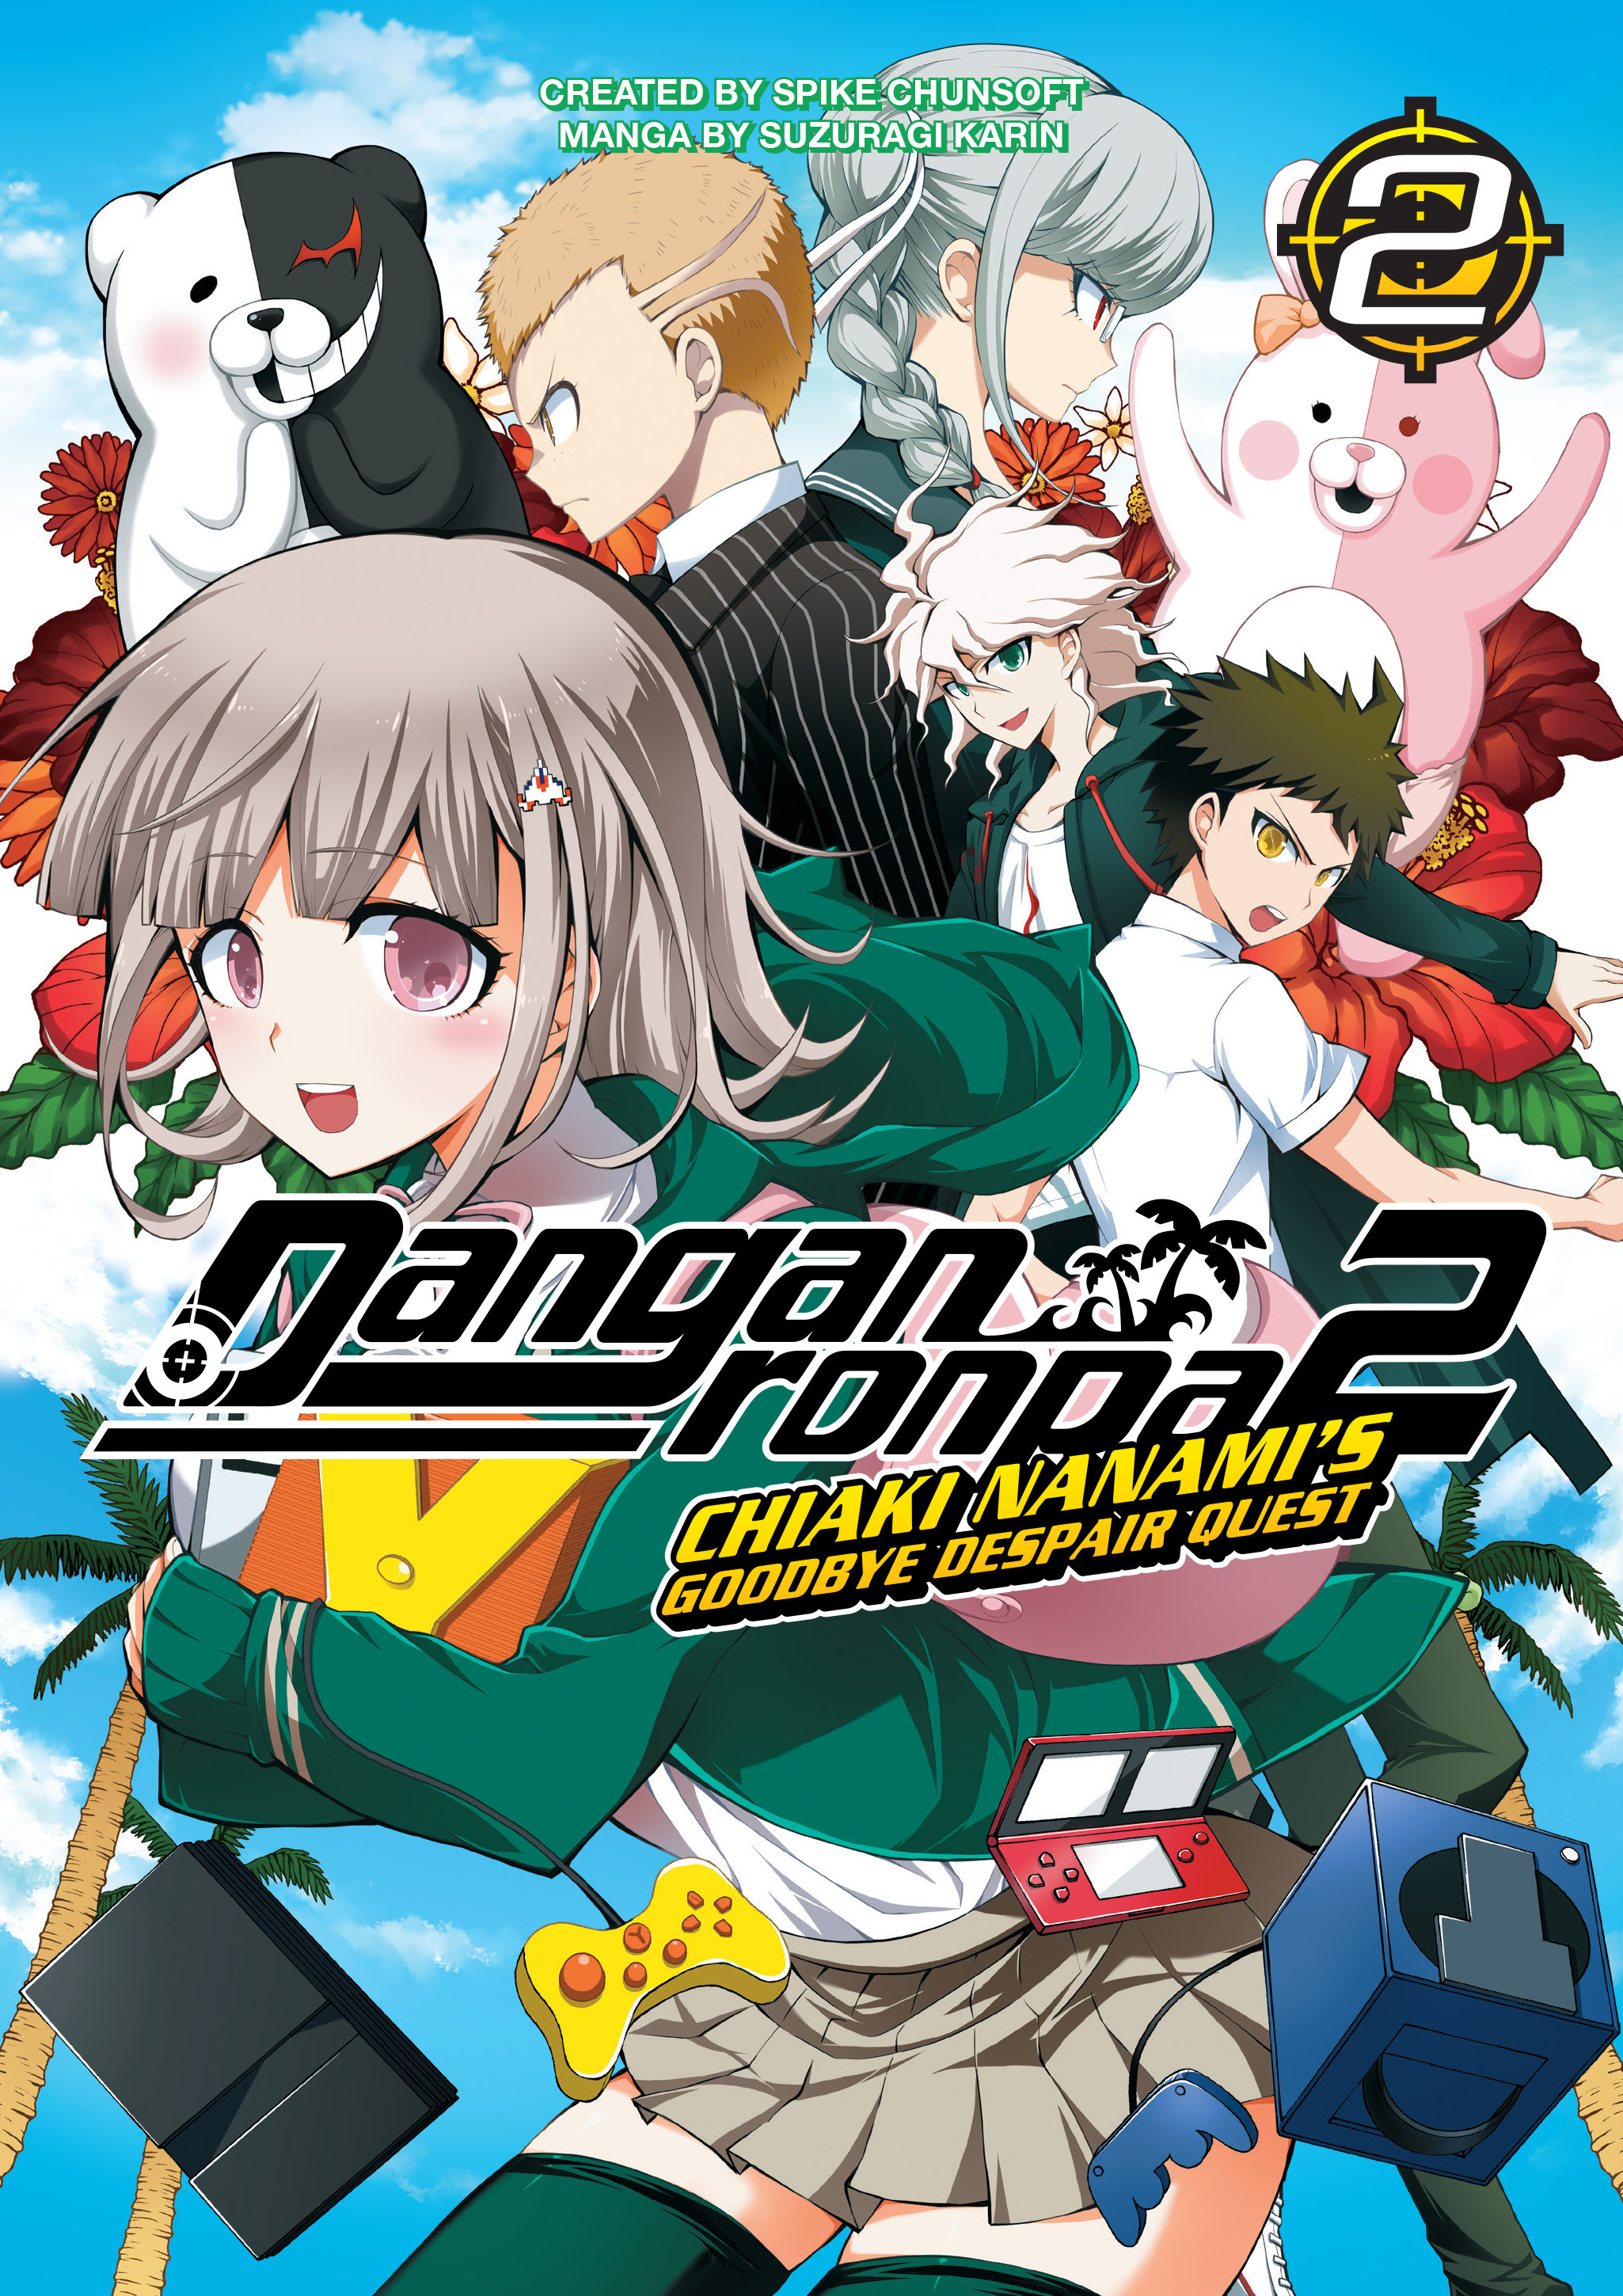 Danganronpa 2: Chiaki Nanami's Goodbye Despair Quest Vol 2 Cover